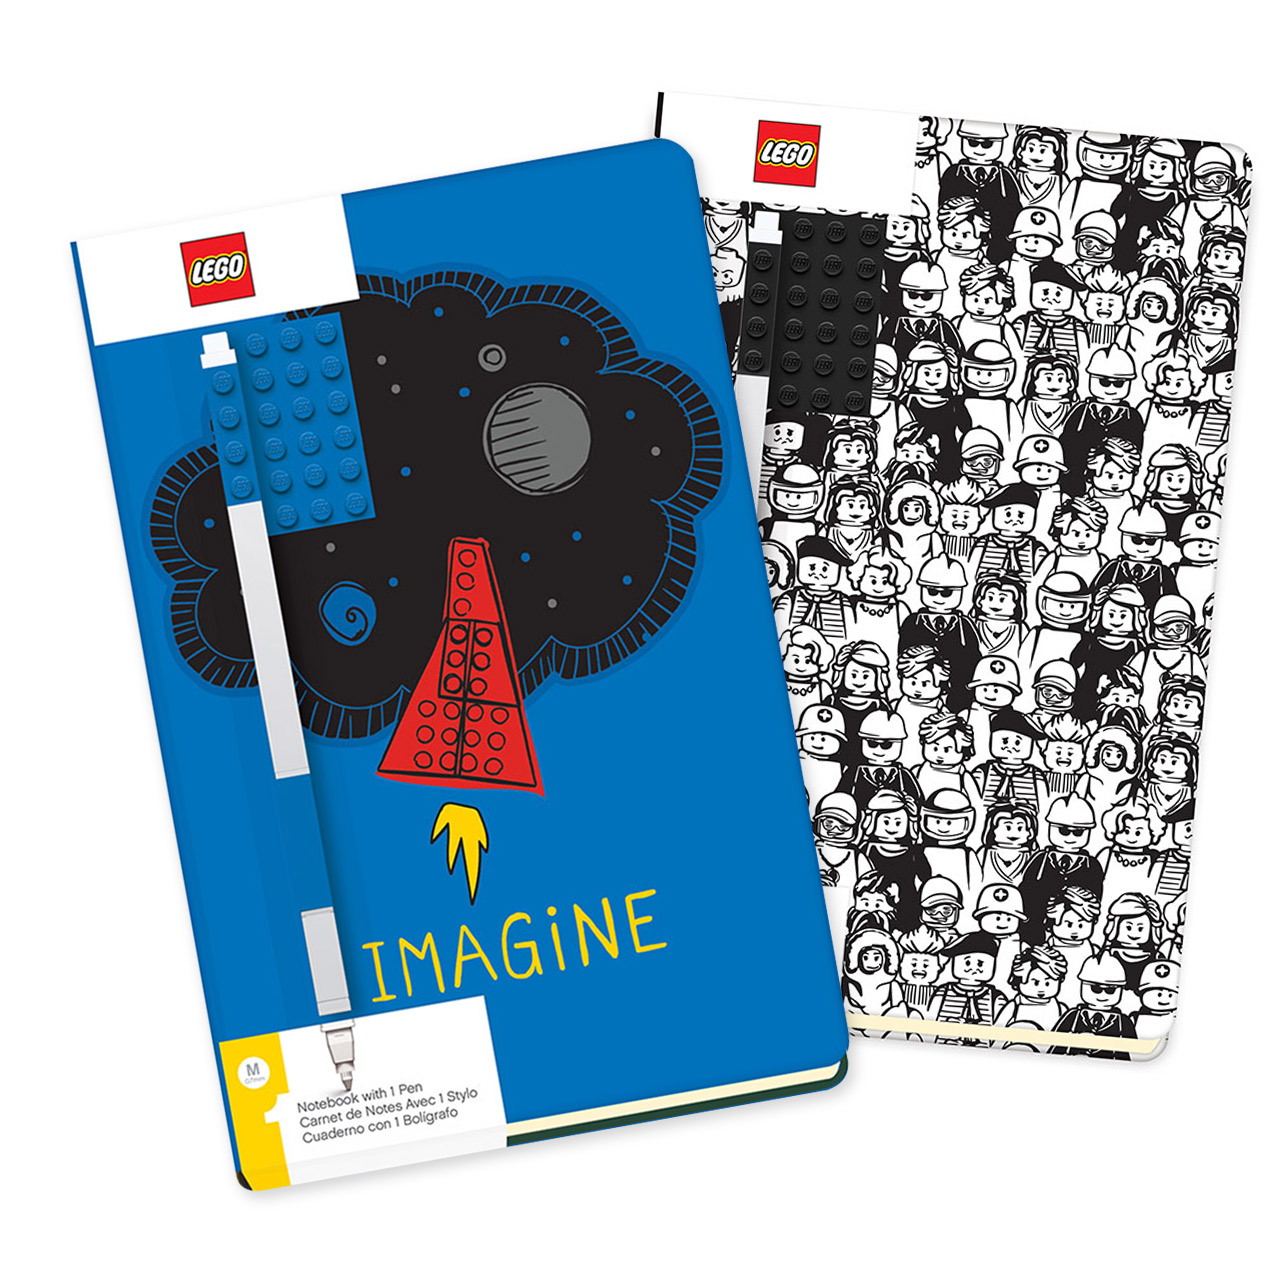 LEGO A5 JOURNAL WITH PEN BLUE IMAGINE DESIGN - alternative